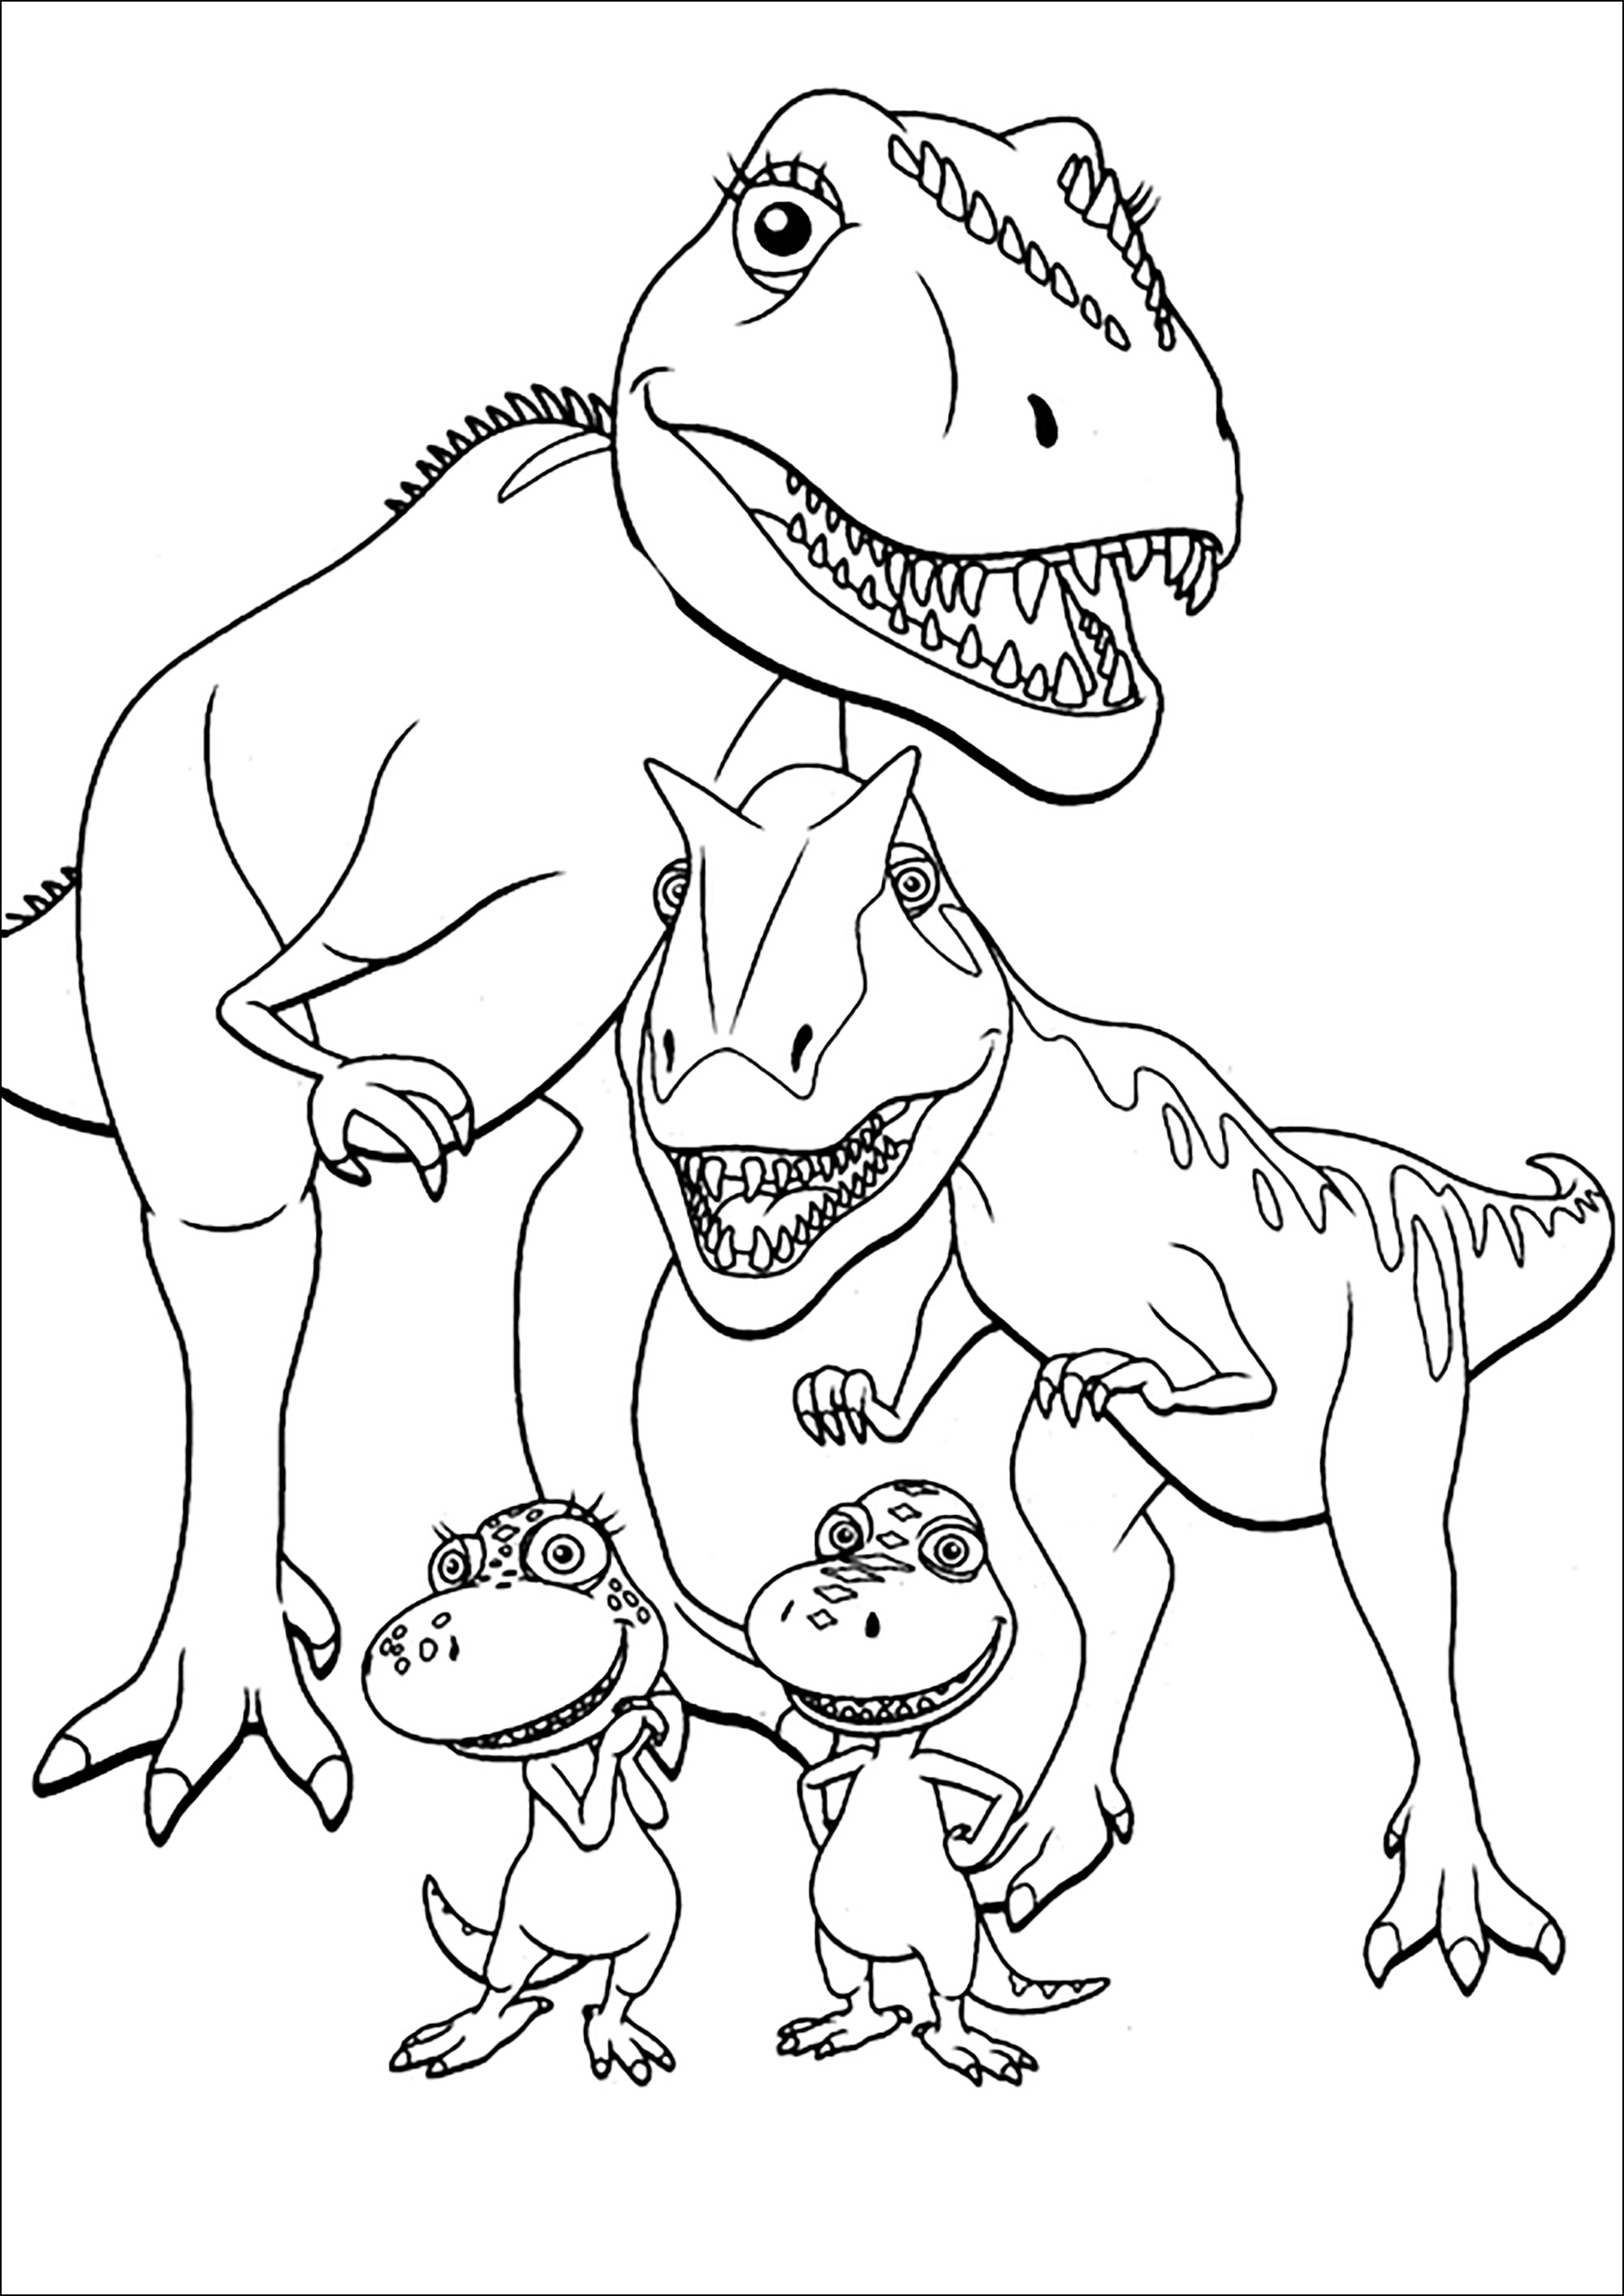 Tyrannosaurus family